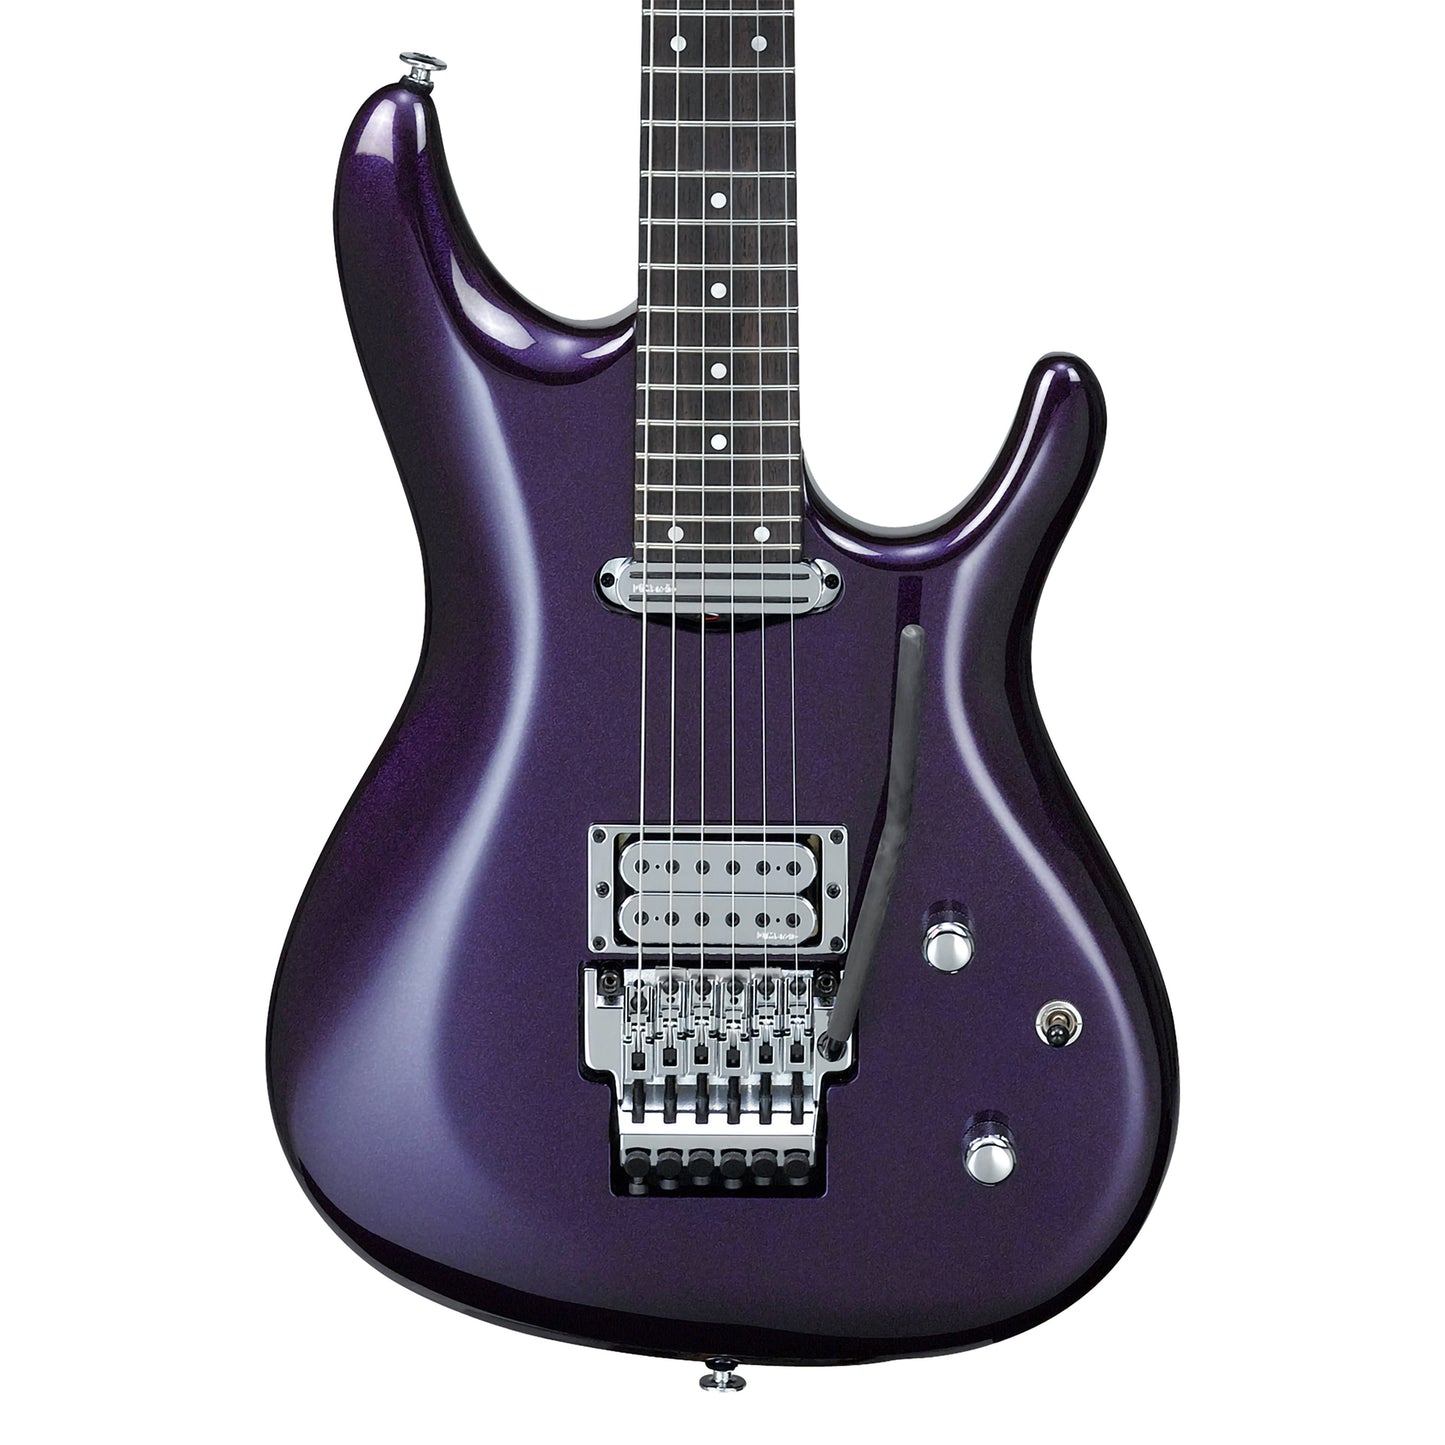 Ibanez JS2450 Joe Satriani Signature Electric Guitar Muscle Car Purple with Case